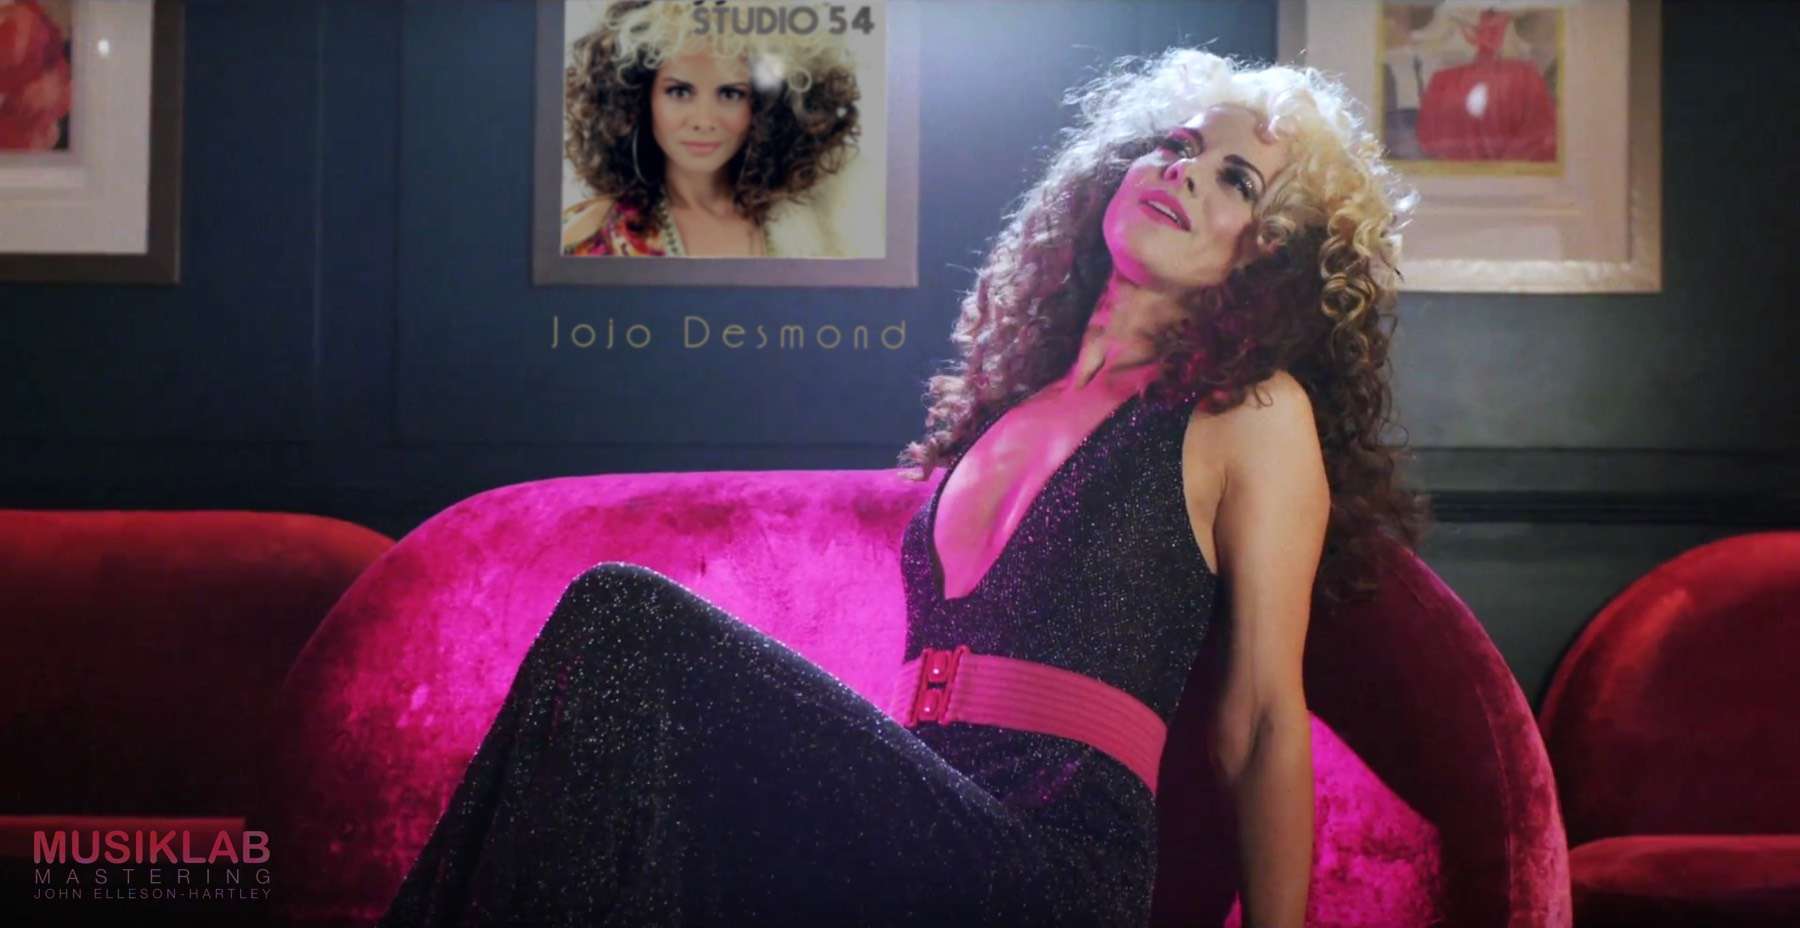 Studio 54 music video by Jojo Desmond